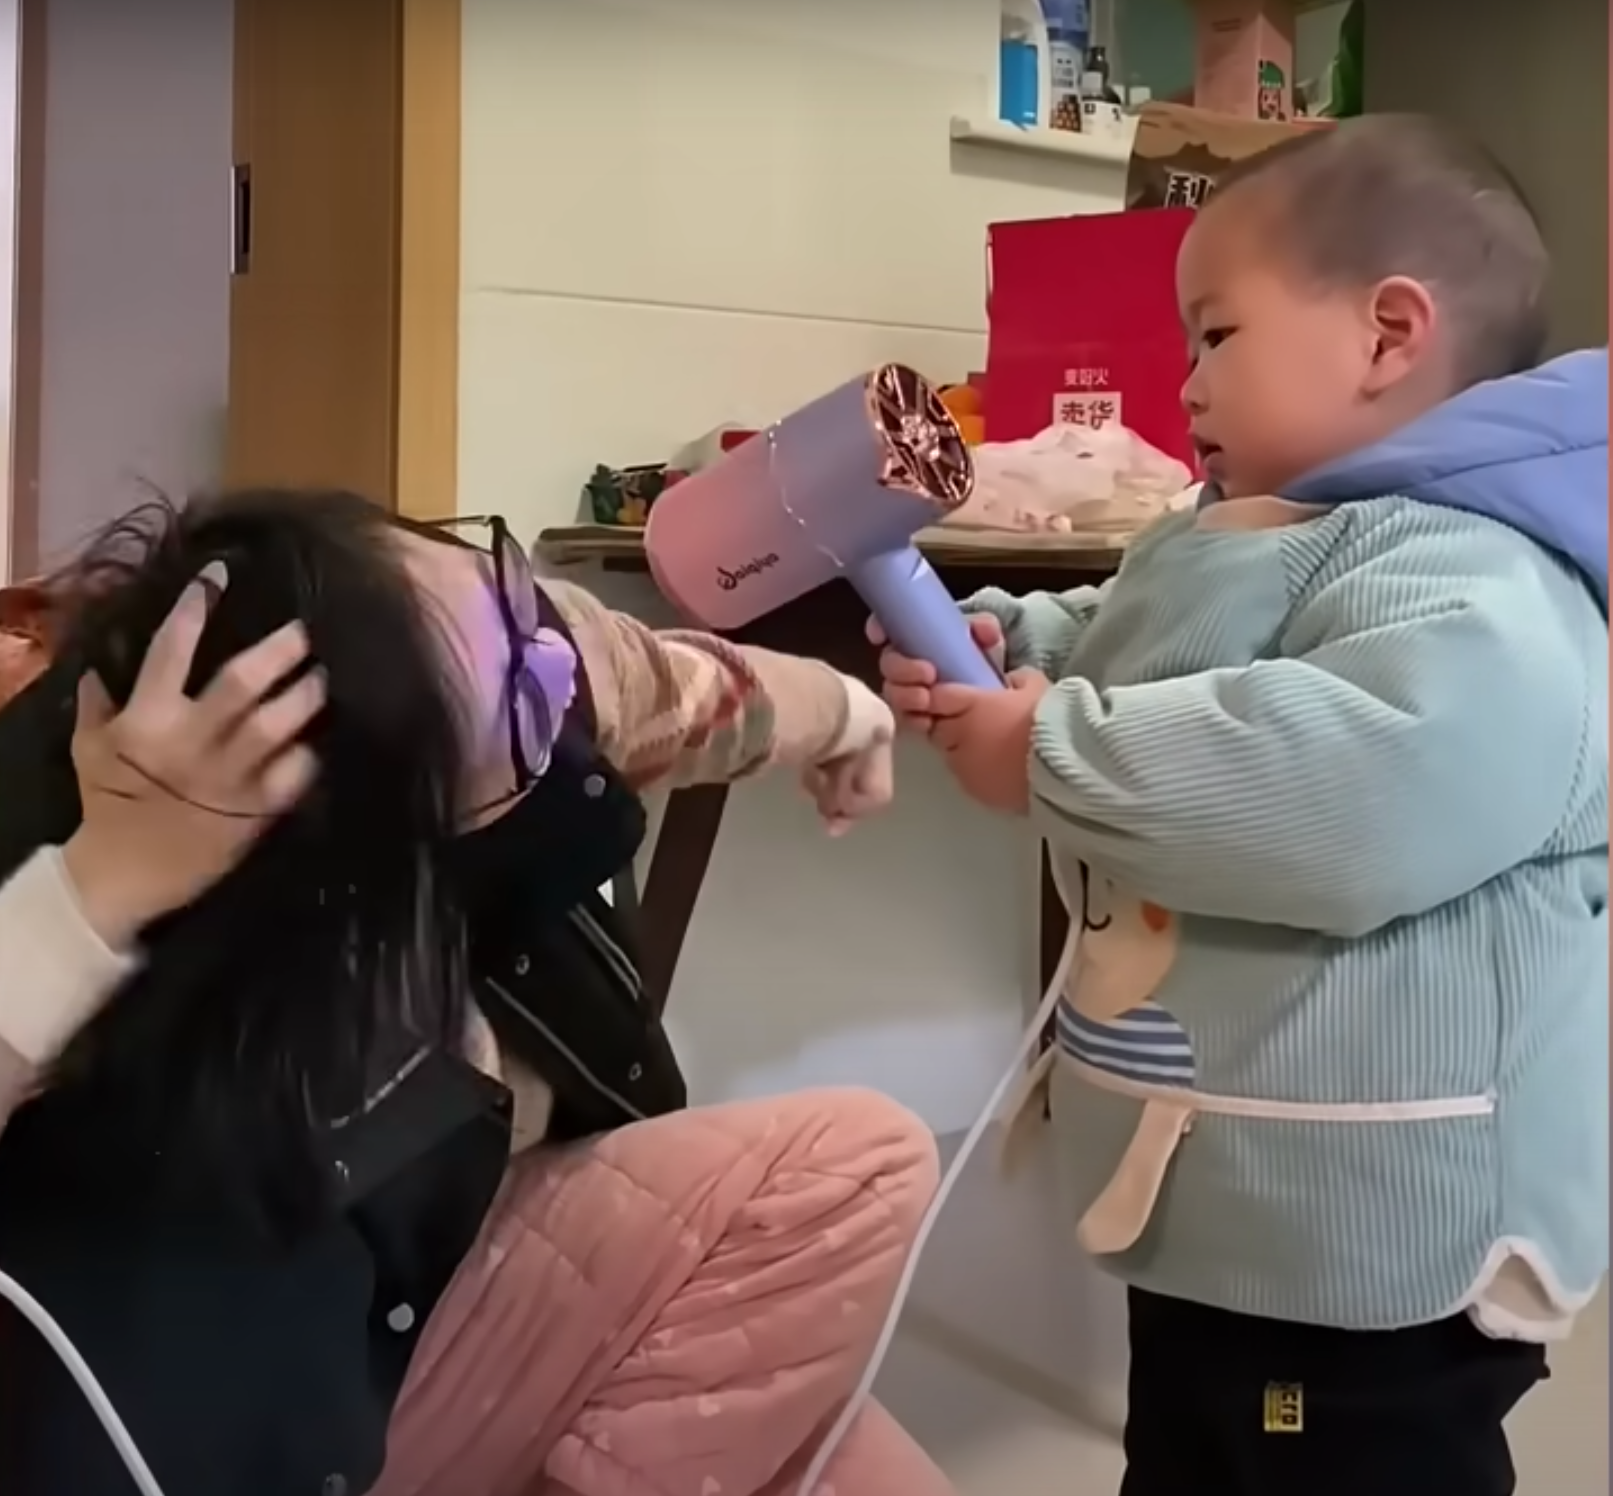 Pomelo hilft seiner Mama beim Halten des Föhns. | Quelle: Youtube.com/South China Morning Post